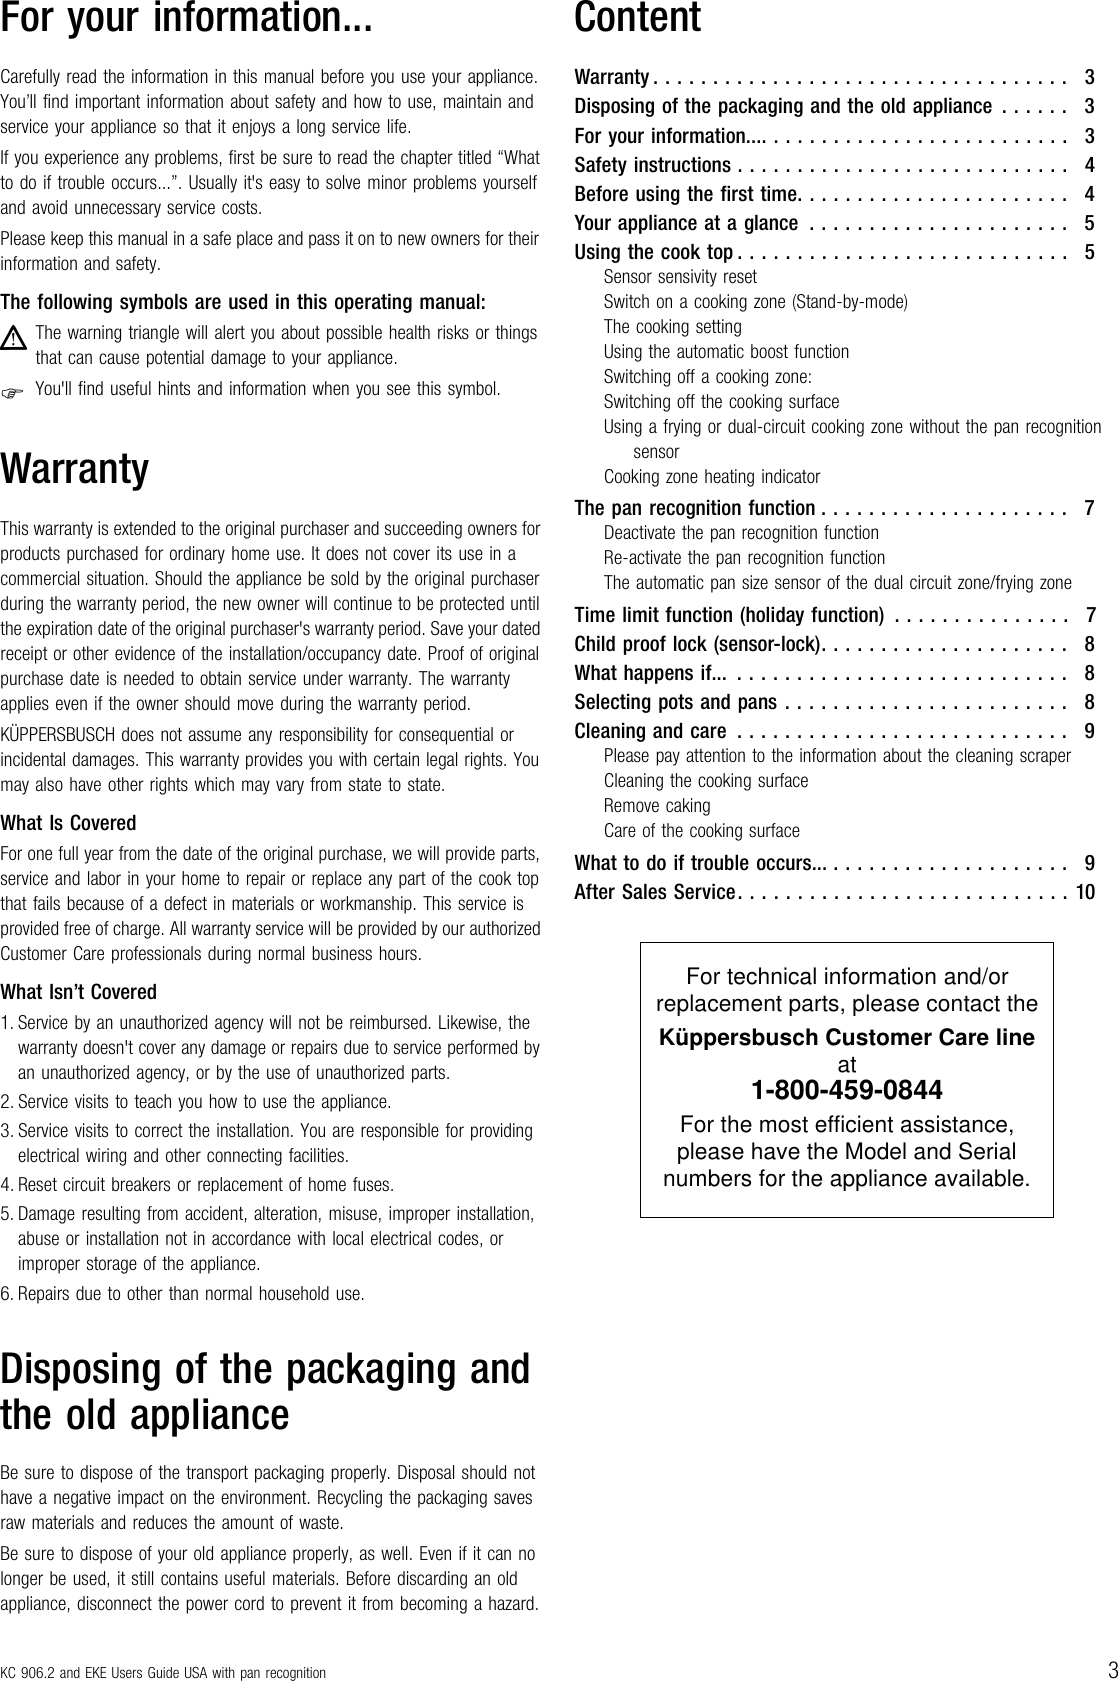 Page 3 of 12 - Kuppersbusch-Usa Kuppersbusch-Usa-604-2-Users-Manual-  Kuppersbusch-usa-604-2-users-manual